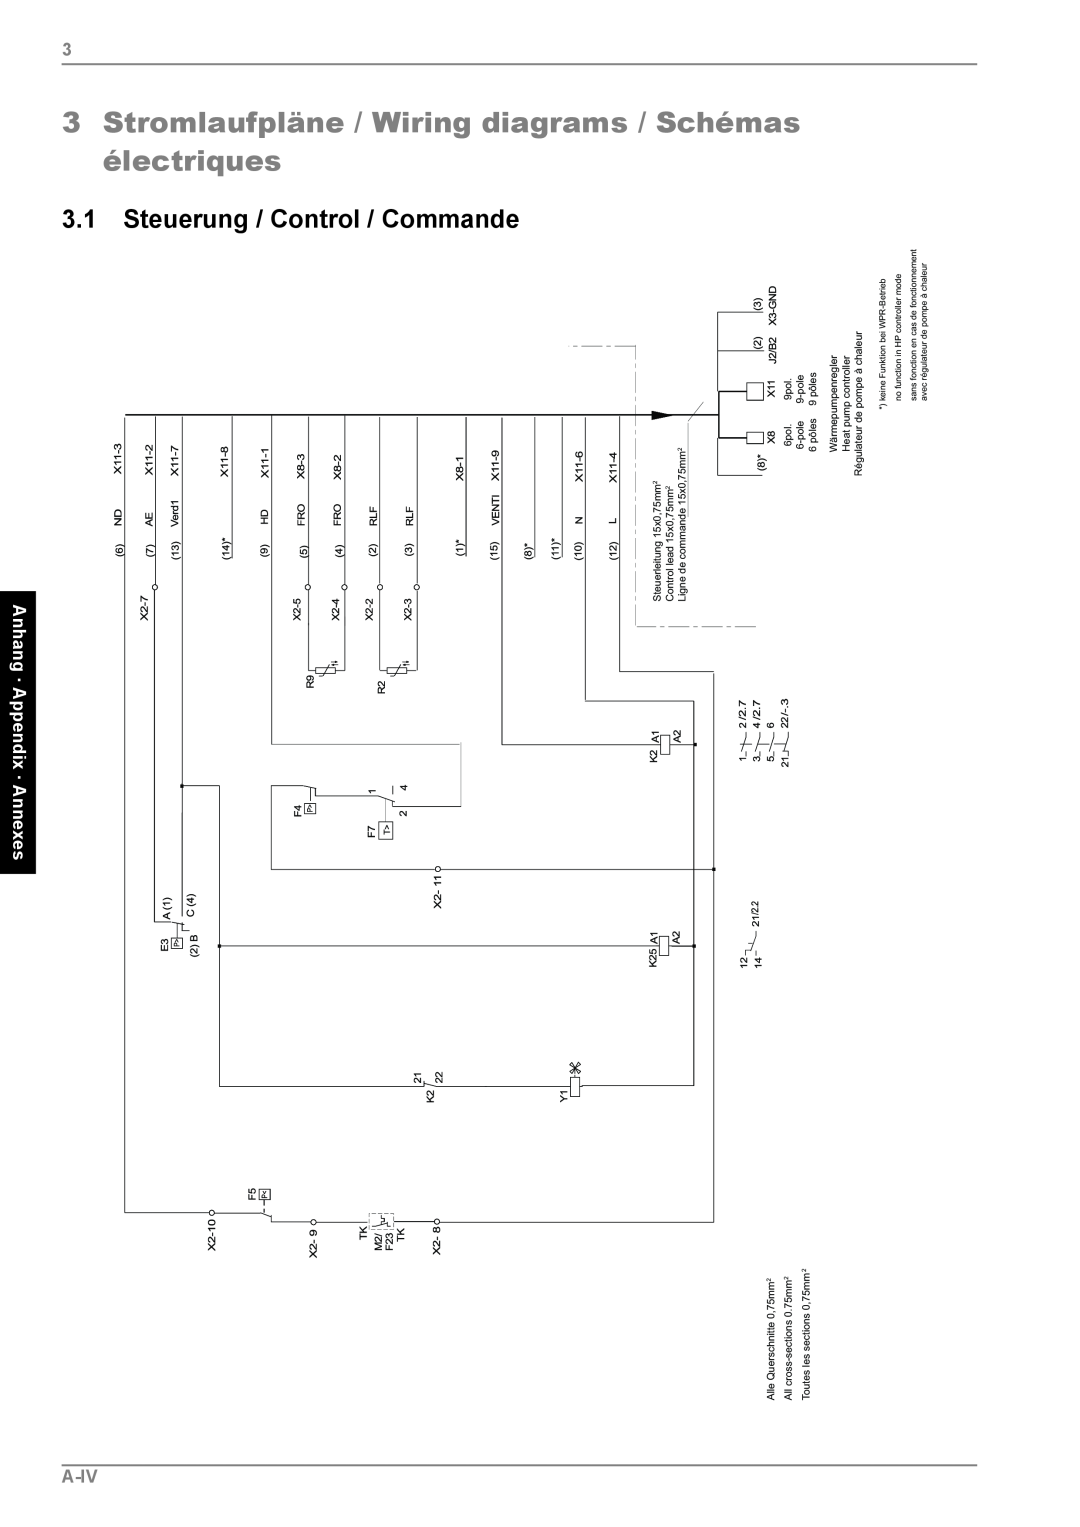 Dimplex LI 11MS 3.1Steuerung / Control / Commande, Anhang · Appendix · Annexes, A-Iv, 6WHXHUOHLWXQJPP 